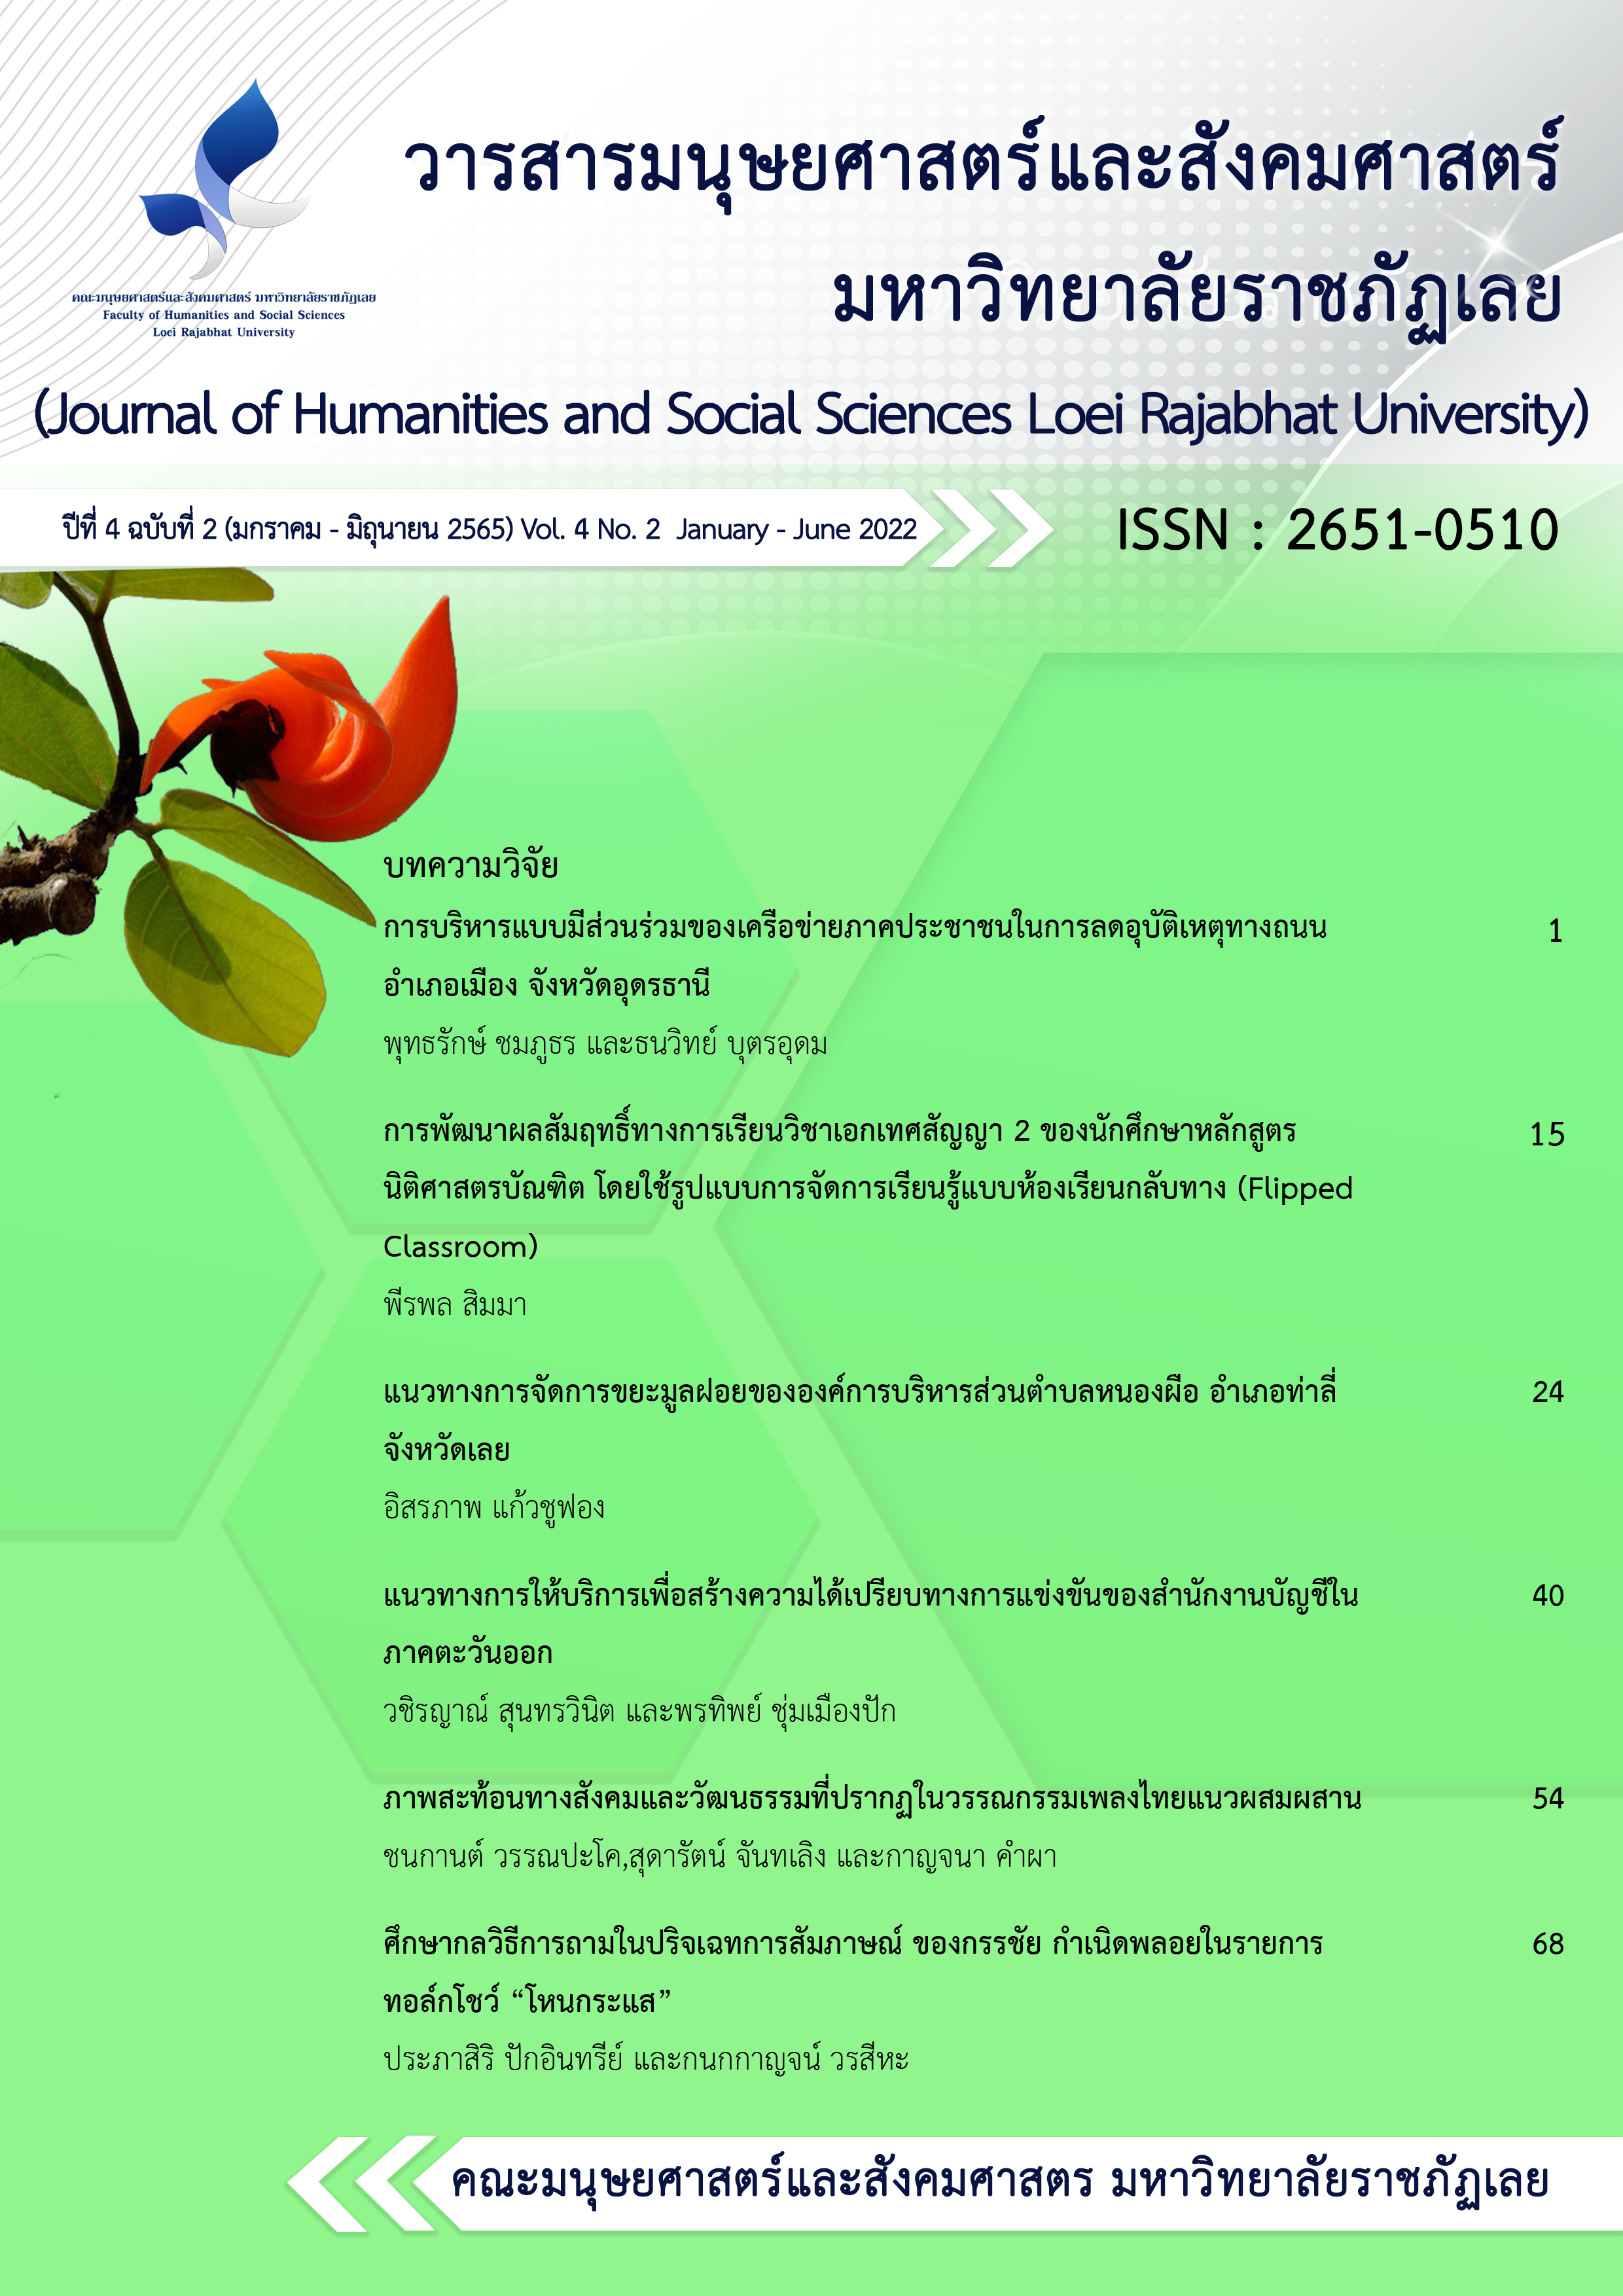 					View Vol. 4 No. 2 (2565): Journal of Humanities and Social Sciences Loei Rajabhat University  Vol. 4 No. 2 January - June 2022
				